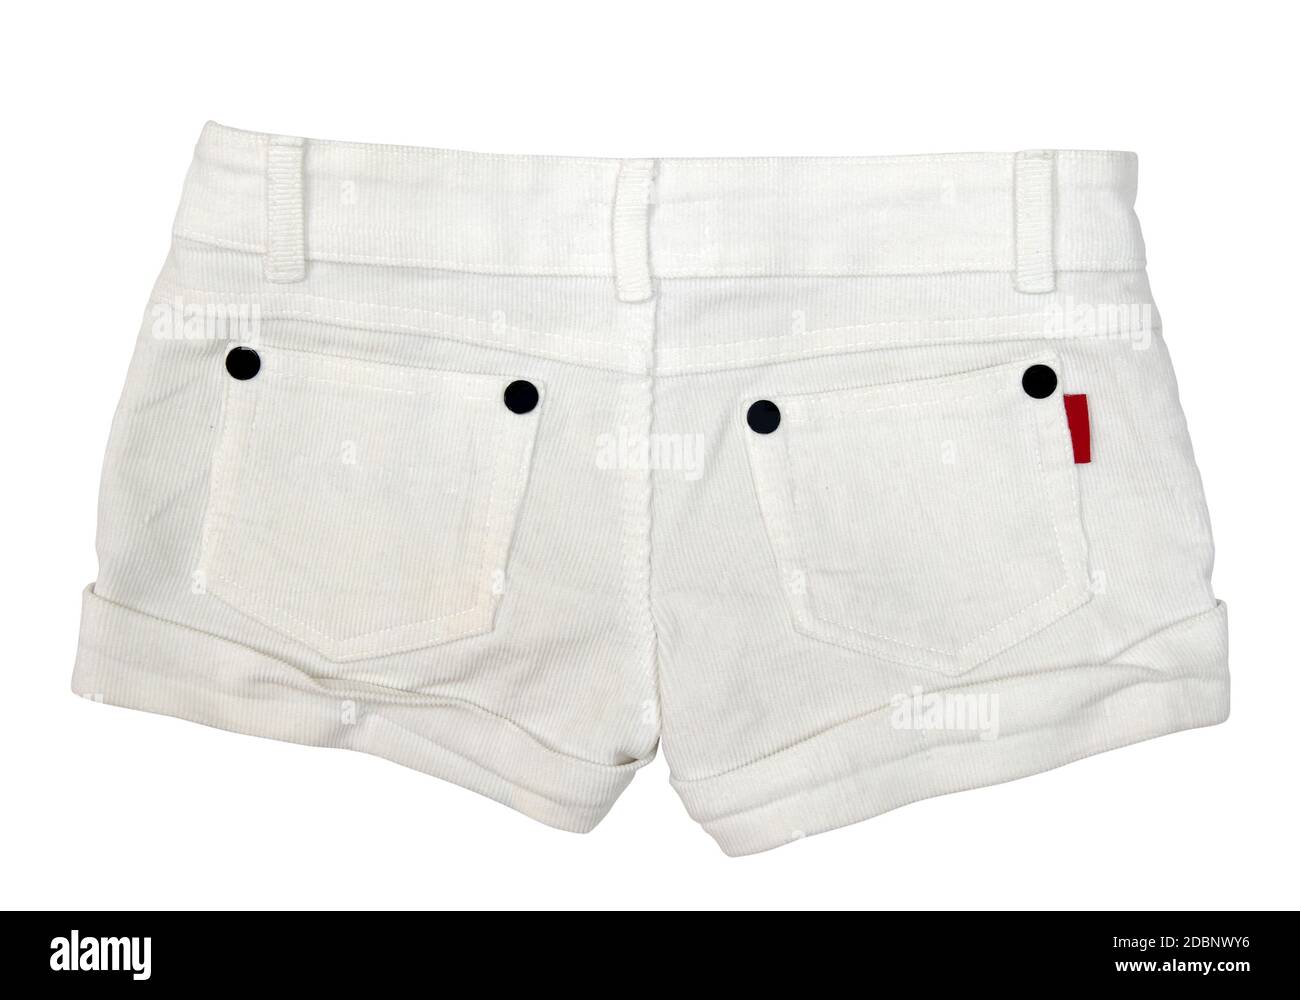 Pantaloncini femmina sulla superficie bianca Foto Stock